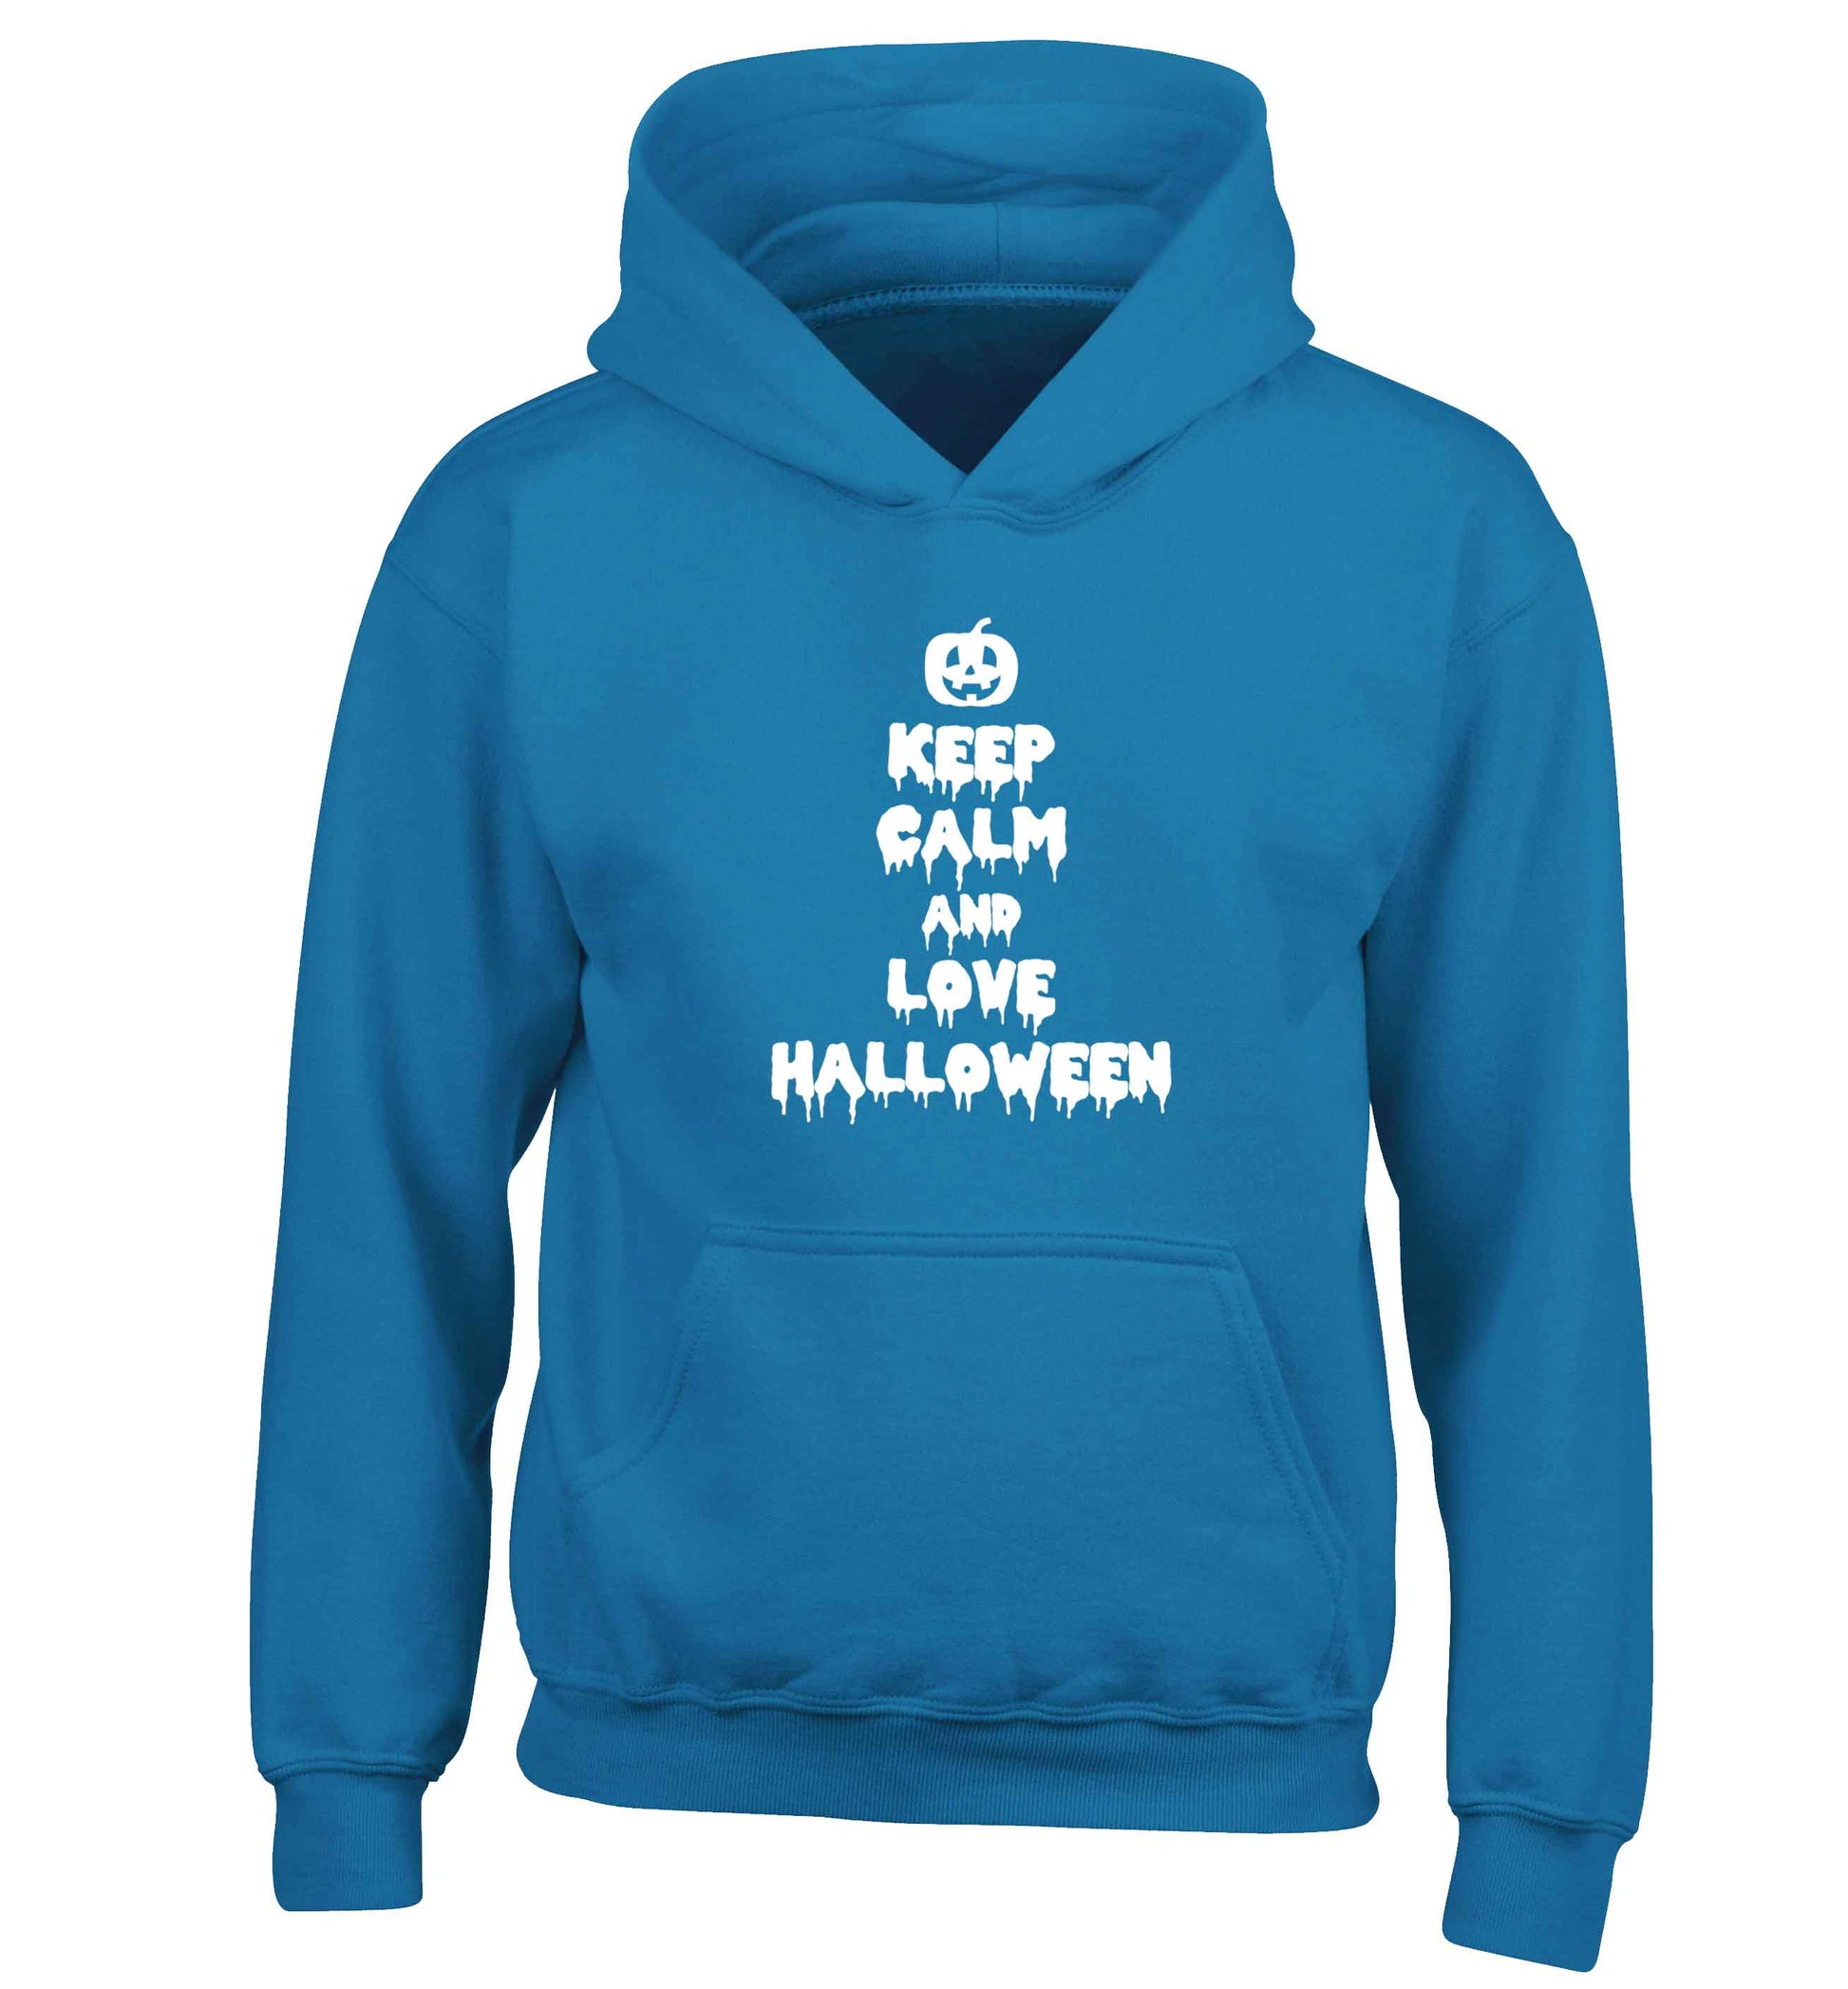 Keep calm and love halloween children's blue hoodie 12-13 Years